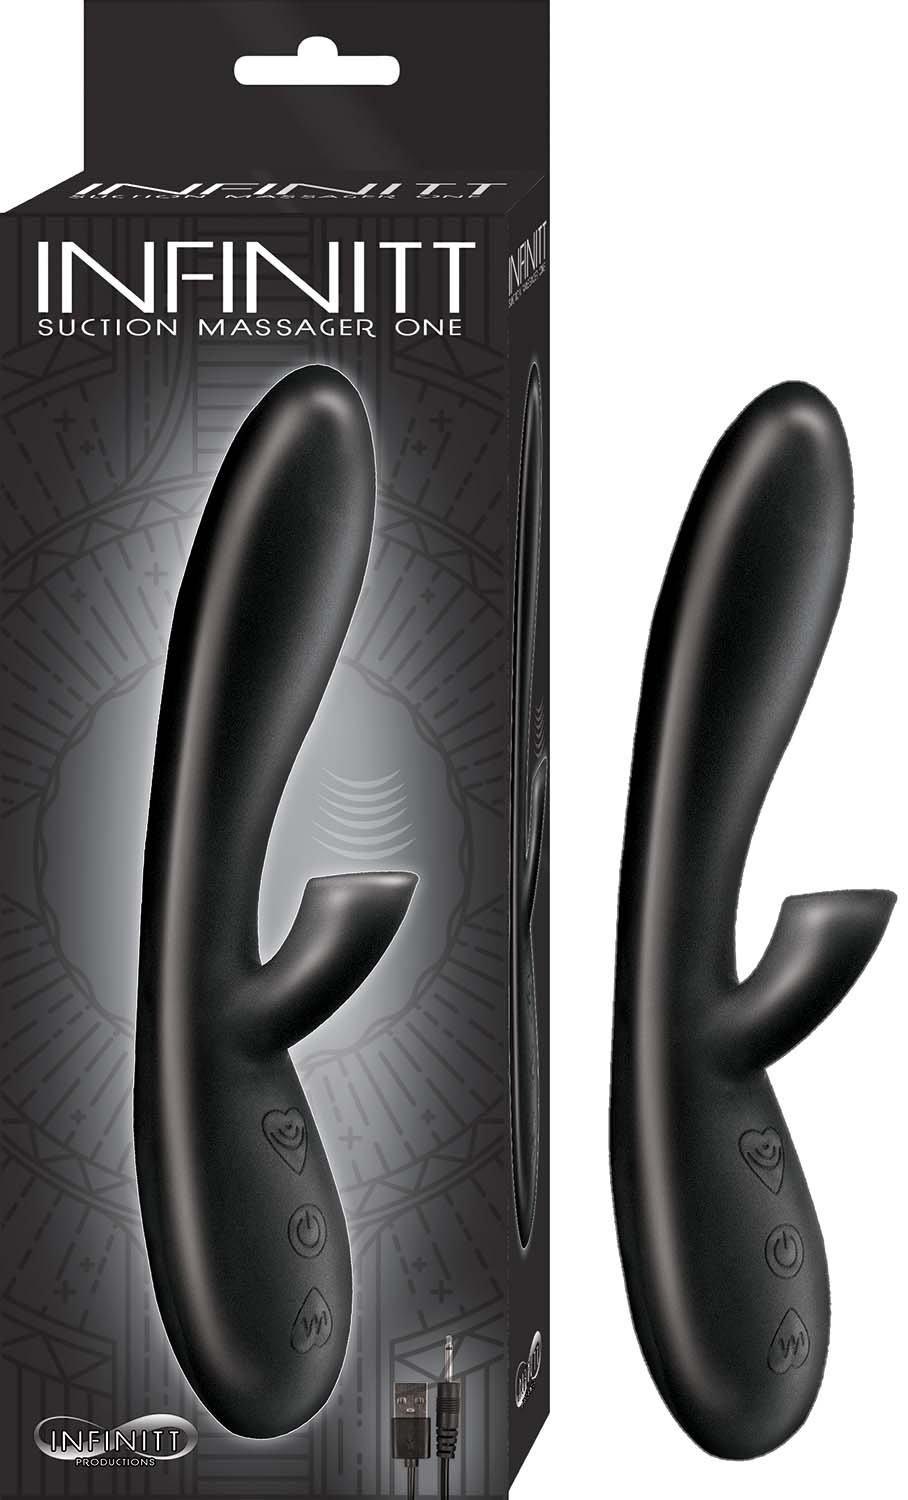 Infinitt Suction Massager One - Black - My Sex Toy Hub